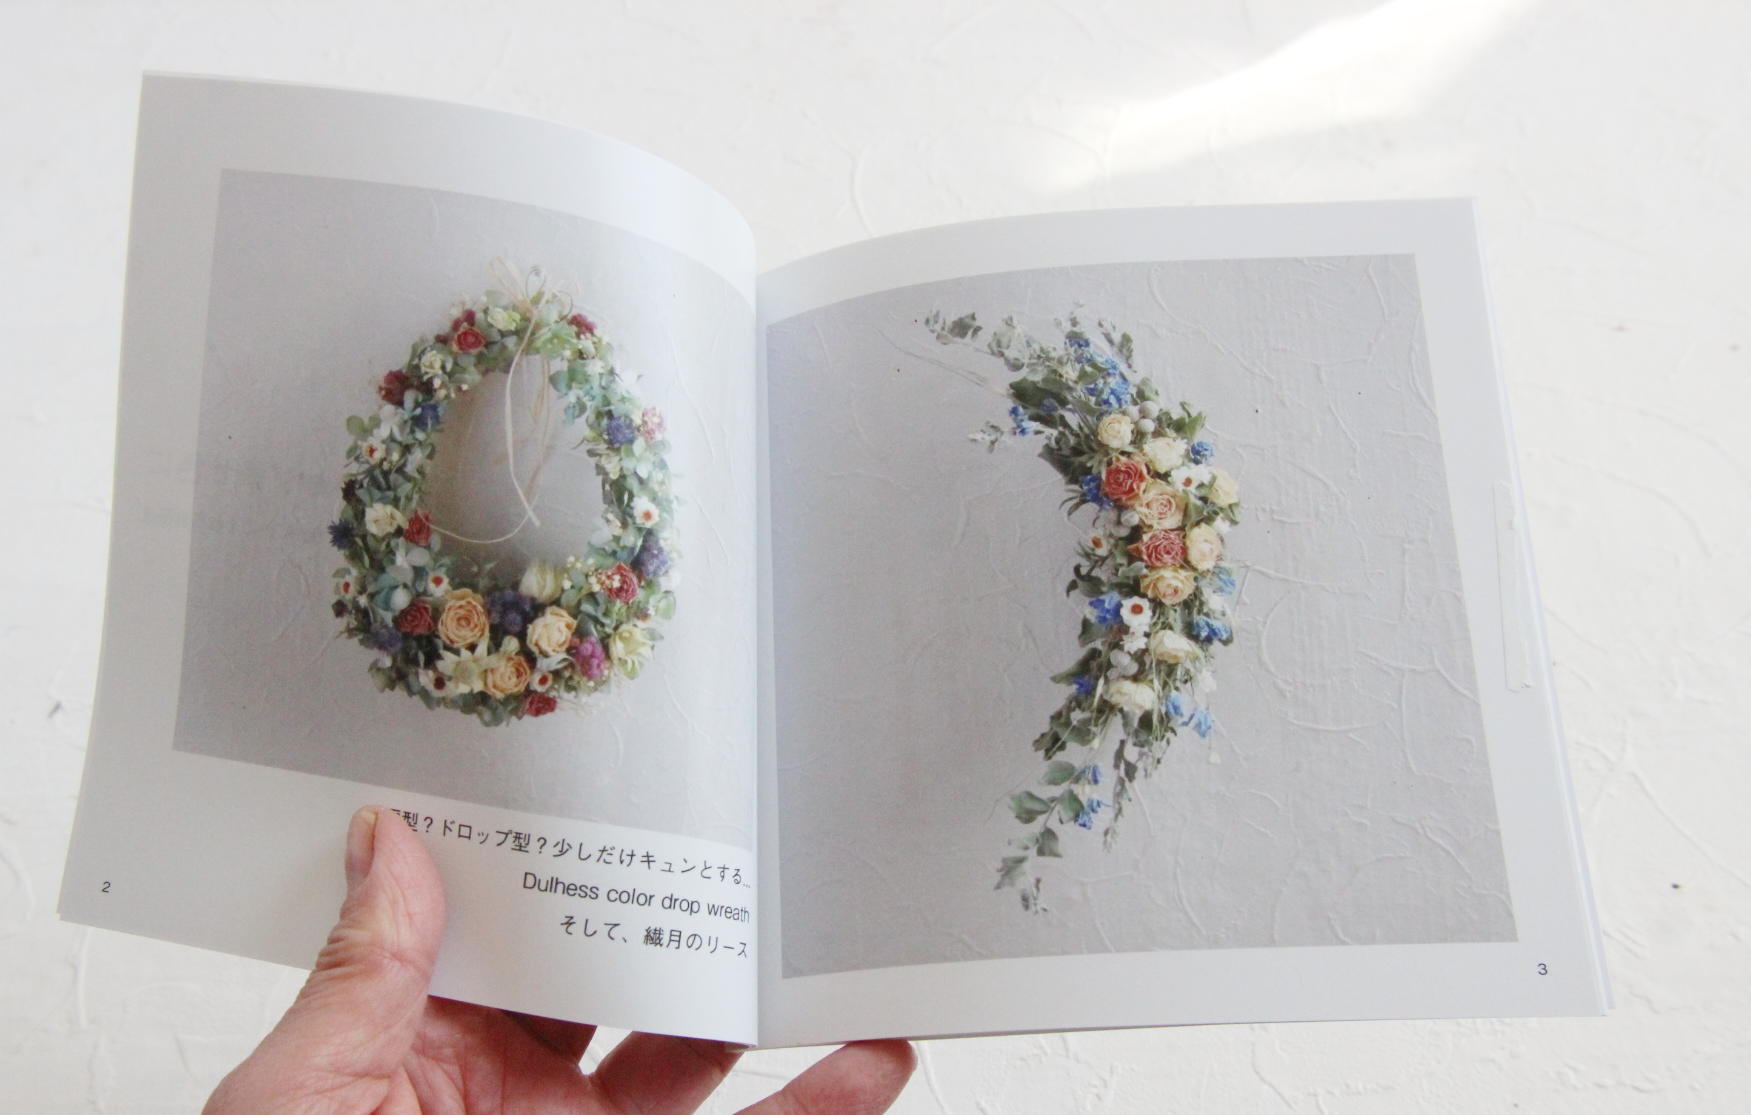 Rakas写真集 Flowers 幸せ色に Iichi ハンドメイド クラフト作品 手仕事品の通販